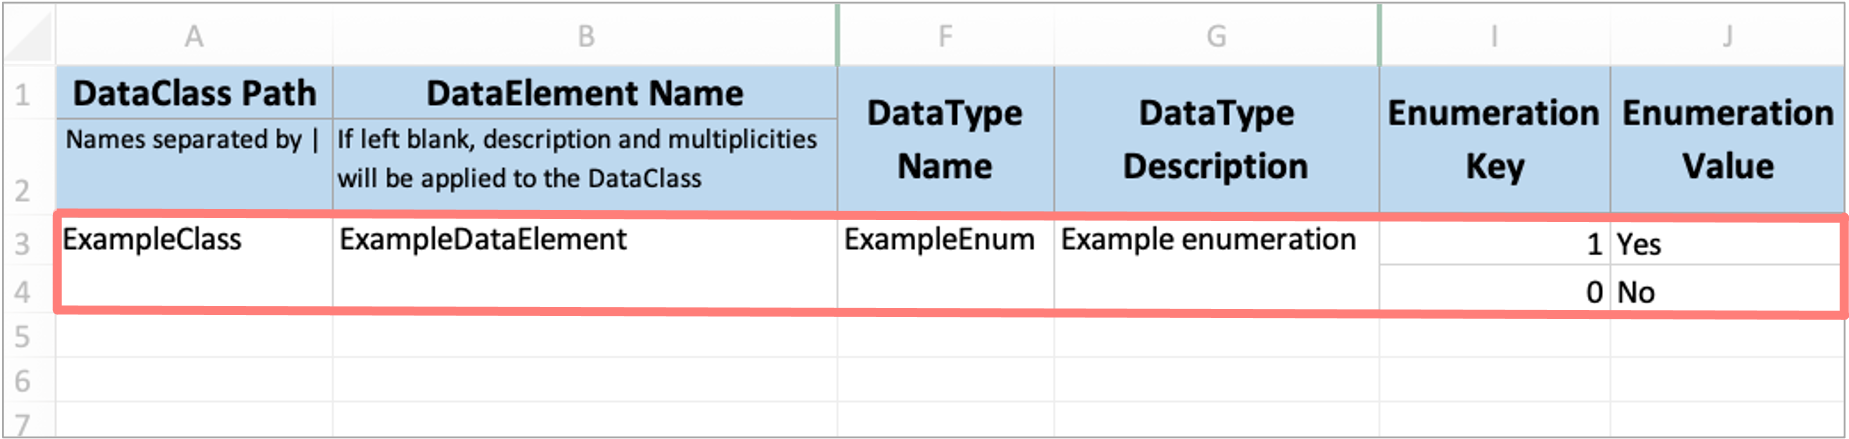 Data Model key sheet for a Data Element of Enumeration Data Type